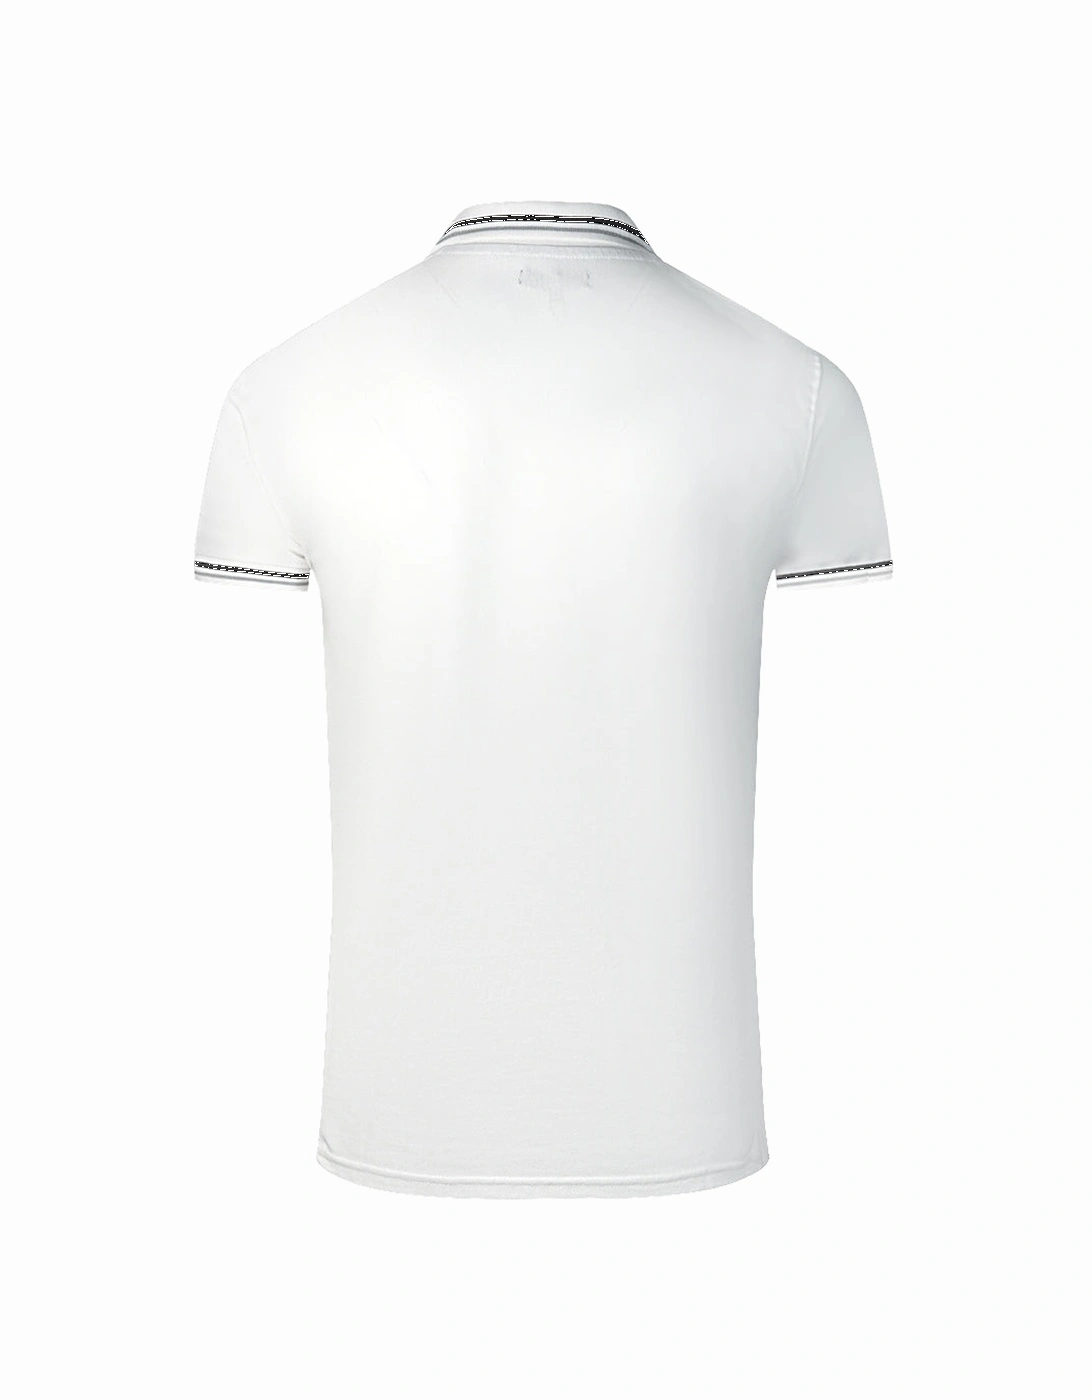 Cavalli Class Twinned Tipped Collar White Polo Shirt